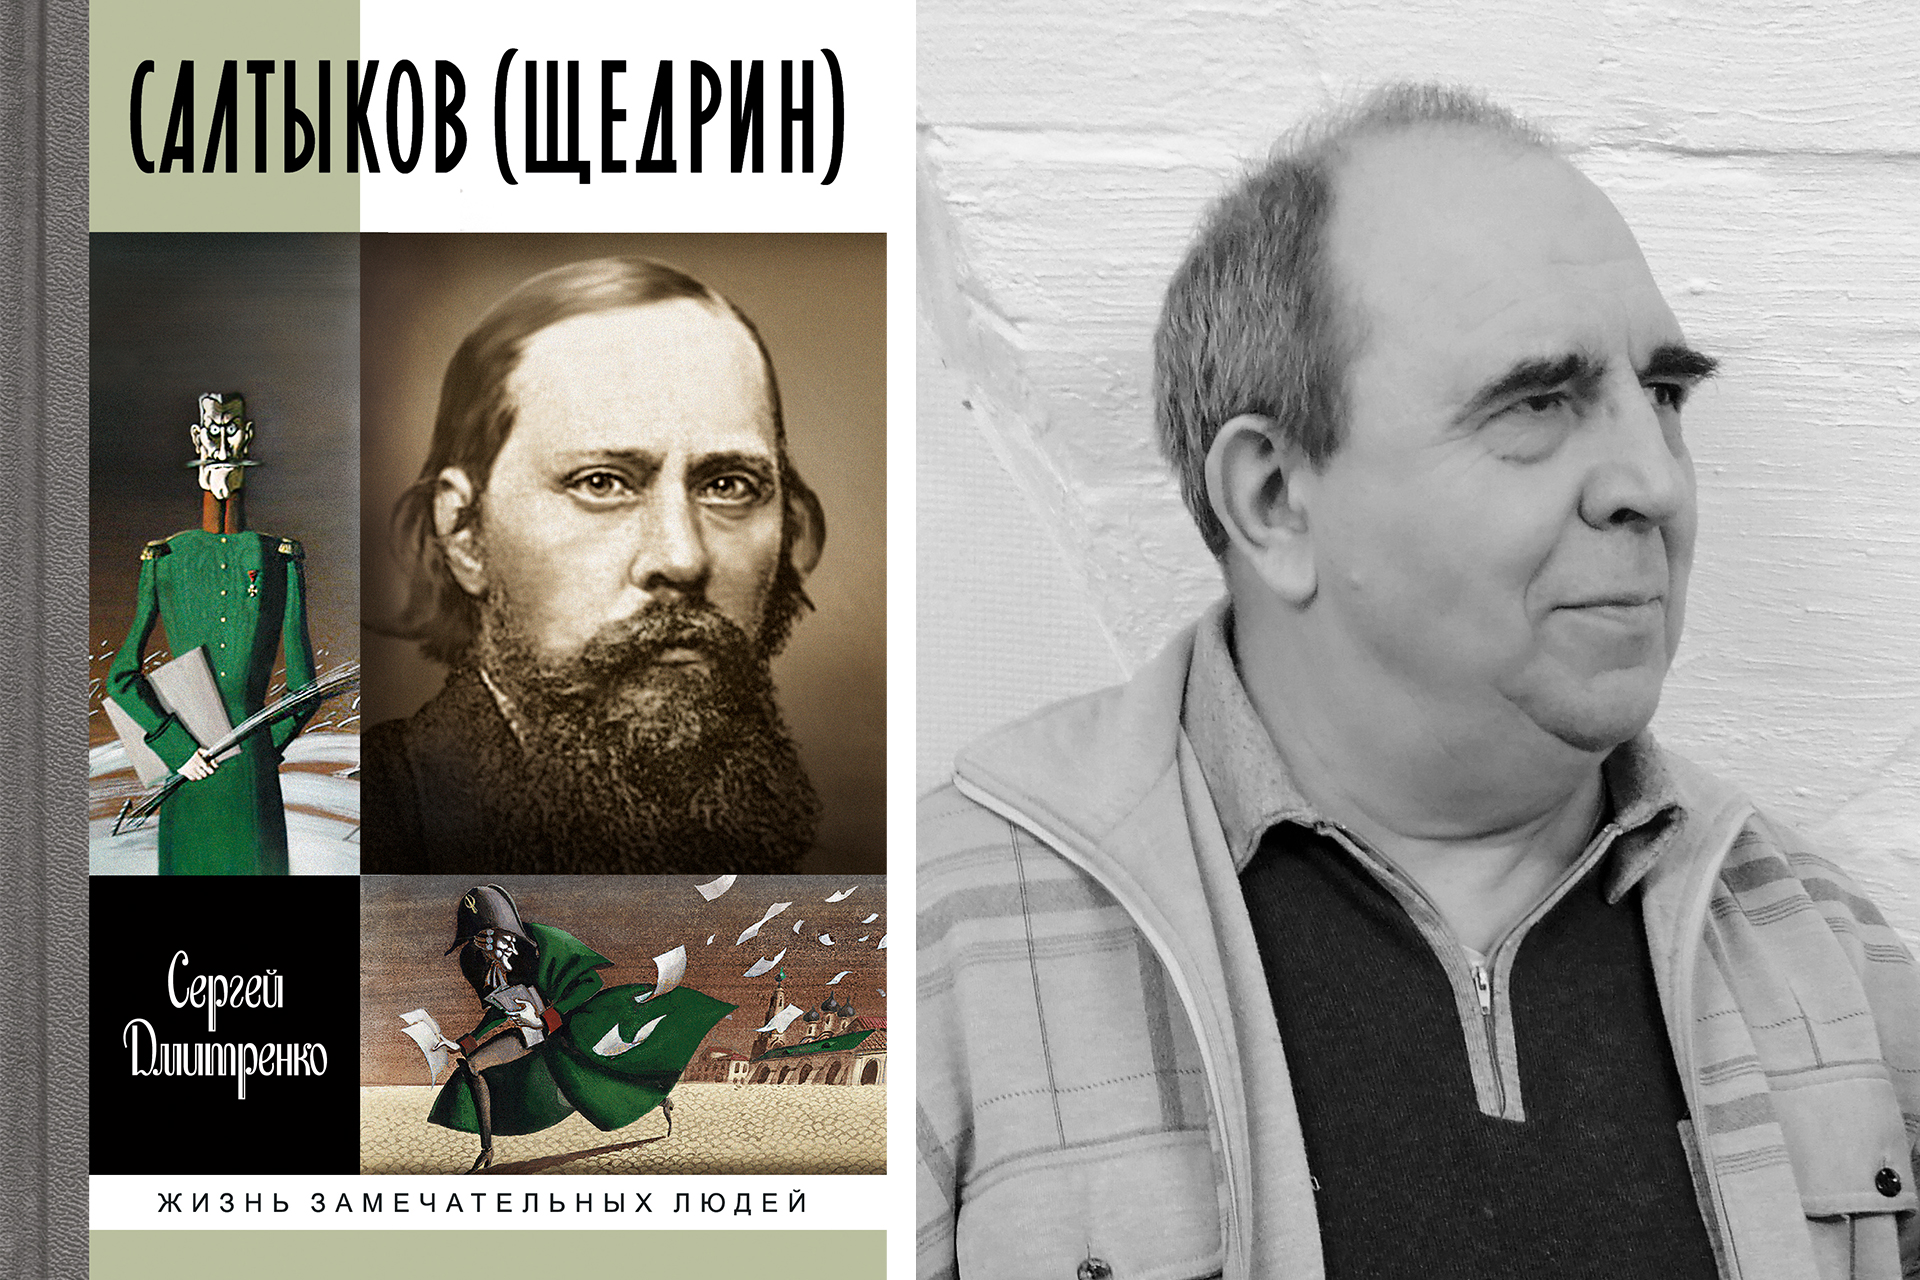 Слева: обложка книги; справа: Сергей Дмитренко